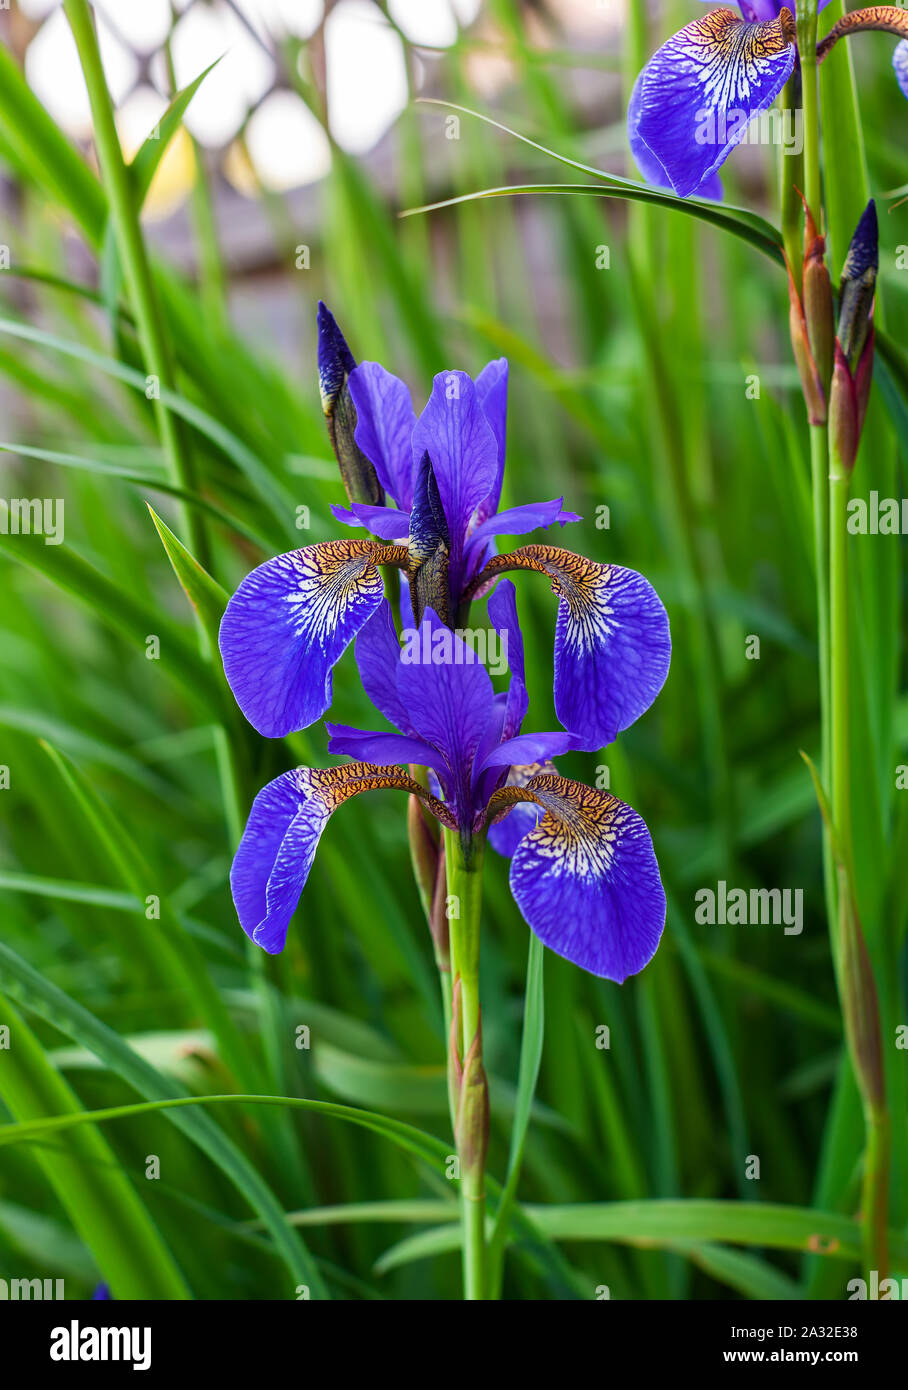 Close-up of blue iris flowers Iris Sibirica in a garden. Stock Photo